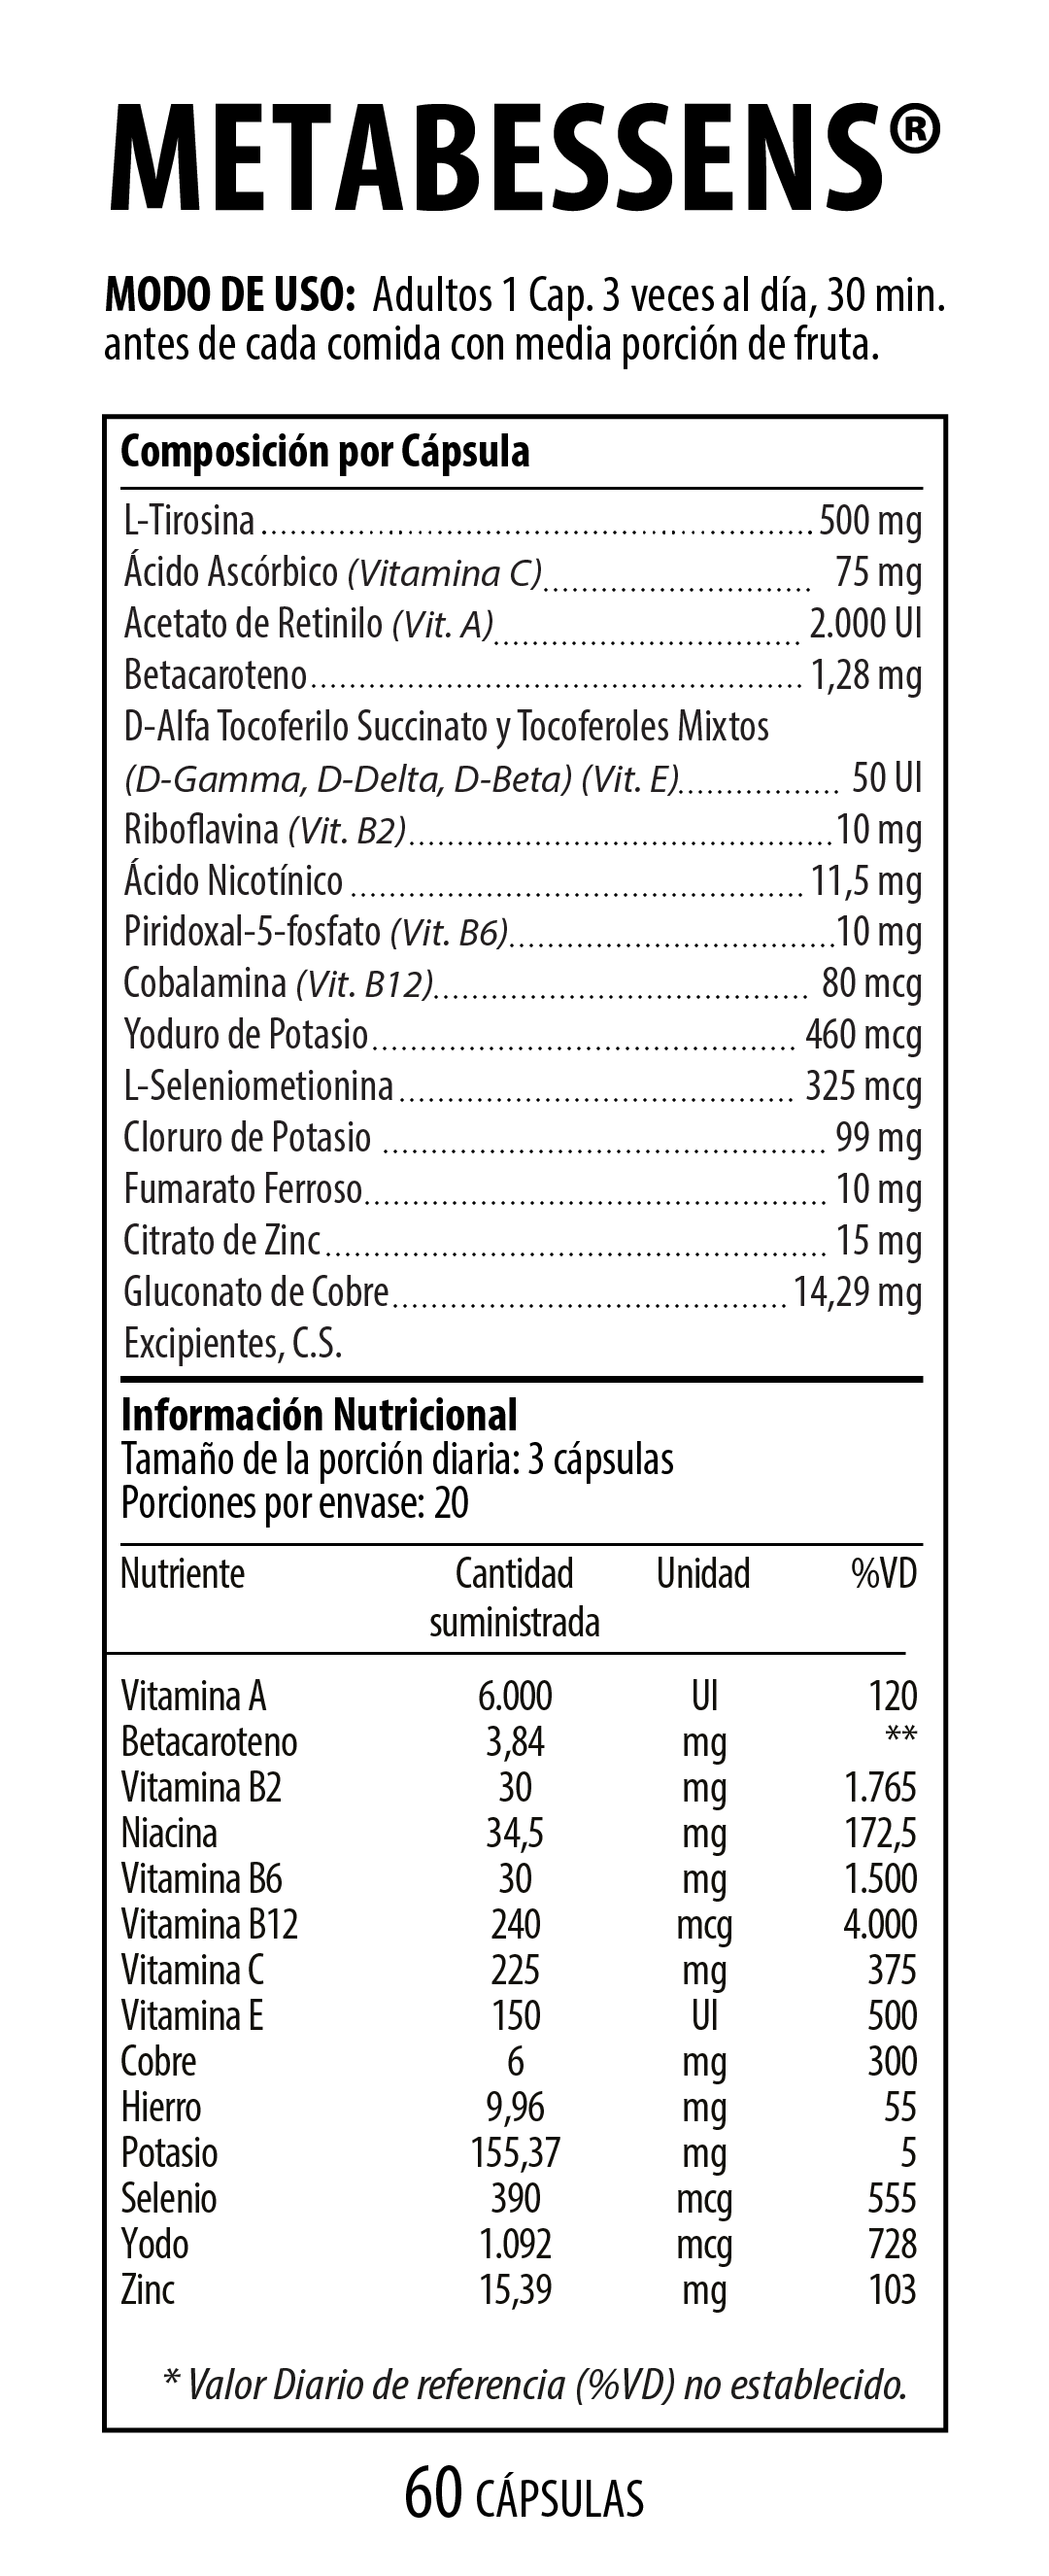 Metabessens Frasco 60 Cápsulas NUTRABIOTICS® - LASKIN